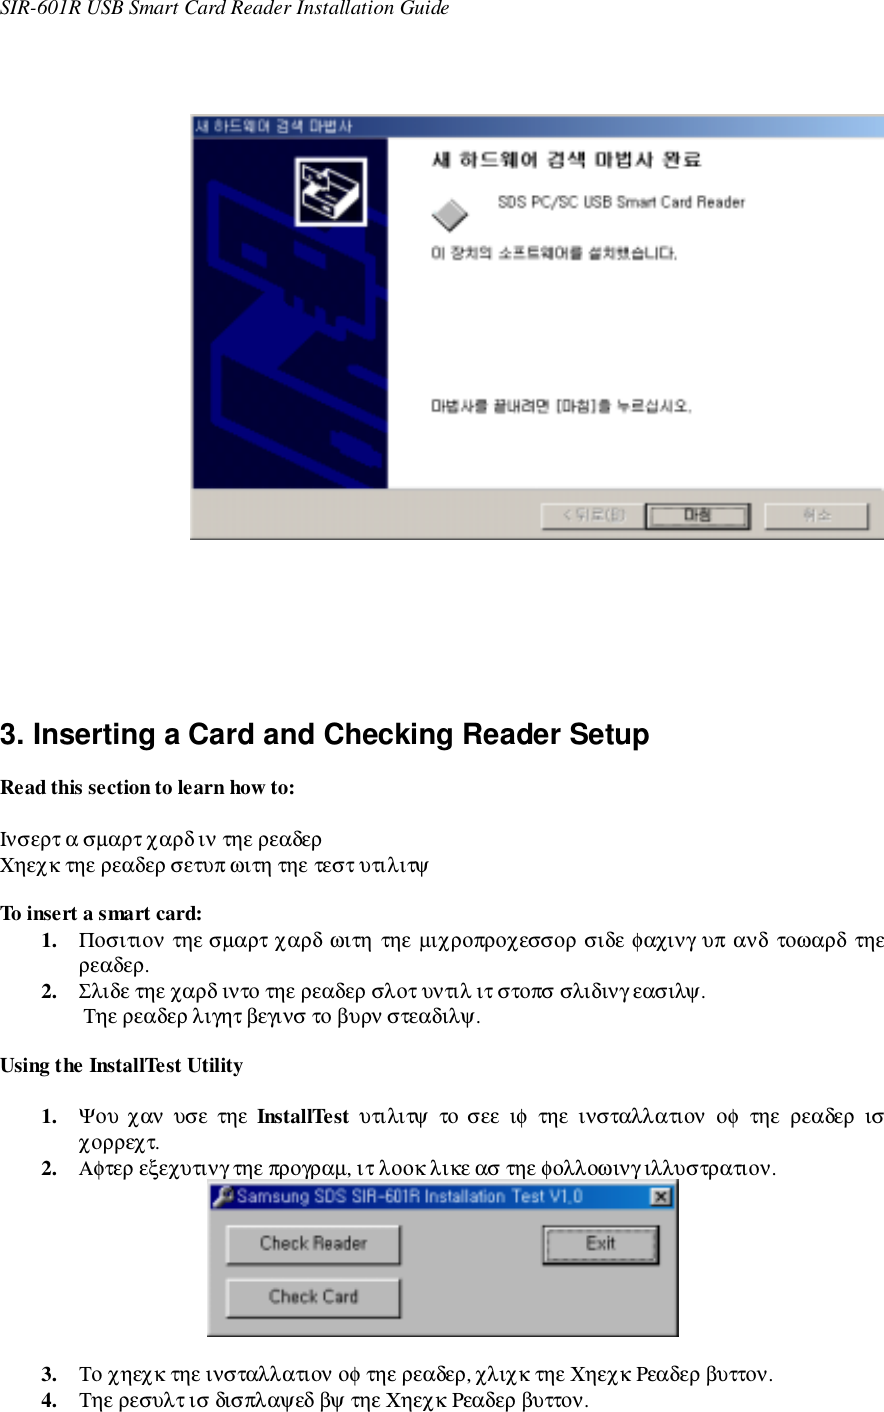 SIR-601R USB Smart Card Reader Installation Guide    3. Inserting a Card and Checking Reader SetupRead this section to learn how to:Ινσερτ α σµαρτ χαρδ ιν τηε ρεαδερΧηεχκ τηε ρεαδερ σετυπ ωιτη τηε τεστ υτιλιτψTo insert a smart card:1. Ποσιτιον τηε σµαρτ χαρδ ωιτη τηε µιχροπροχεσσορ σιδε φαχινγ υπ ανδ τοωαρδ τηερεαδερ.2. Σλιδε τηε χαρδ ιντο τηε ρεαδερ σλοτ υντιλ ιτ στοπσ σλιδινγ εασιλψ.Τηε ρεαδερ λιγητ βεγινσ το βυρν στεαδιλψ.Using the InstallTest Utility1. Ψου χαν  υσε  τηε  InstallTest  υτιλιτψ το σεε ιφ τηε ινσταλλατιον οφ τηε ρεαδερ ισχορρεχτ.2. Αφτερ εξεχυτινγ τηε προγραµ, ιτ λοοκ λικε ασ τηε φολλοωινγ ιλλυστρατιον.3. Το χηεχκ τηε ινσταλλατιον οφ τηε ρεαδερ, χλιχκ τηε Χηεχκ Ρεαδερ βυττον.4. Τηε ρεσυλτ ισ δισπλαψεδ βψ τηε Χηεχκ Ρεαδερ βυττον.